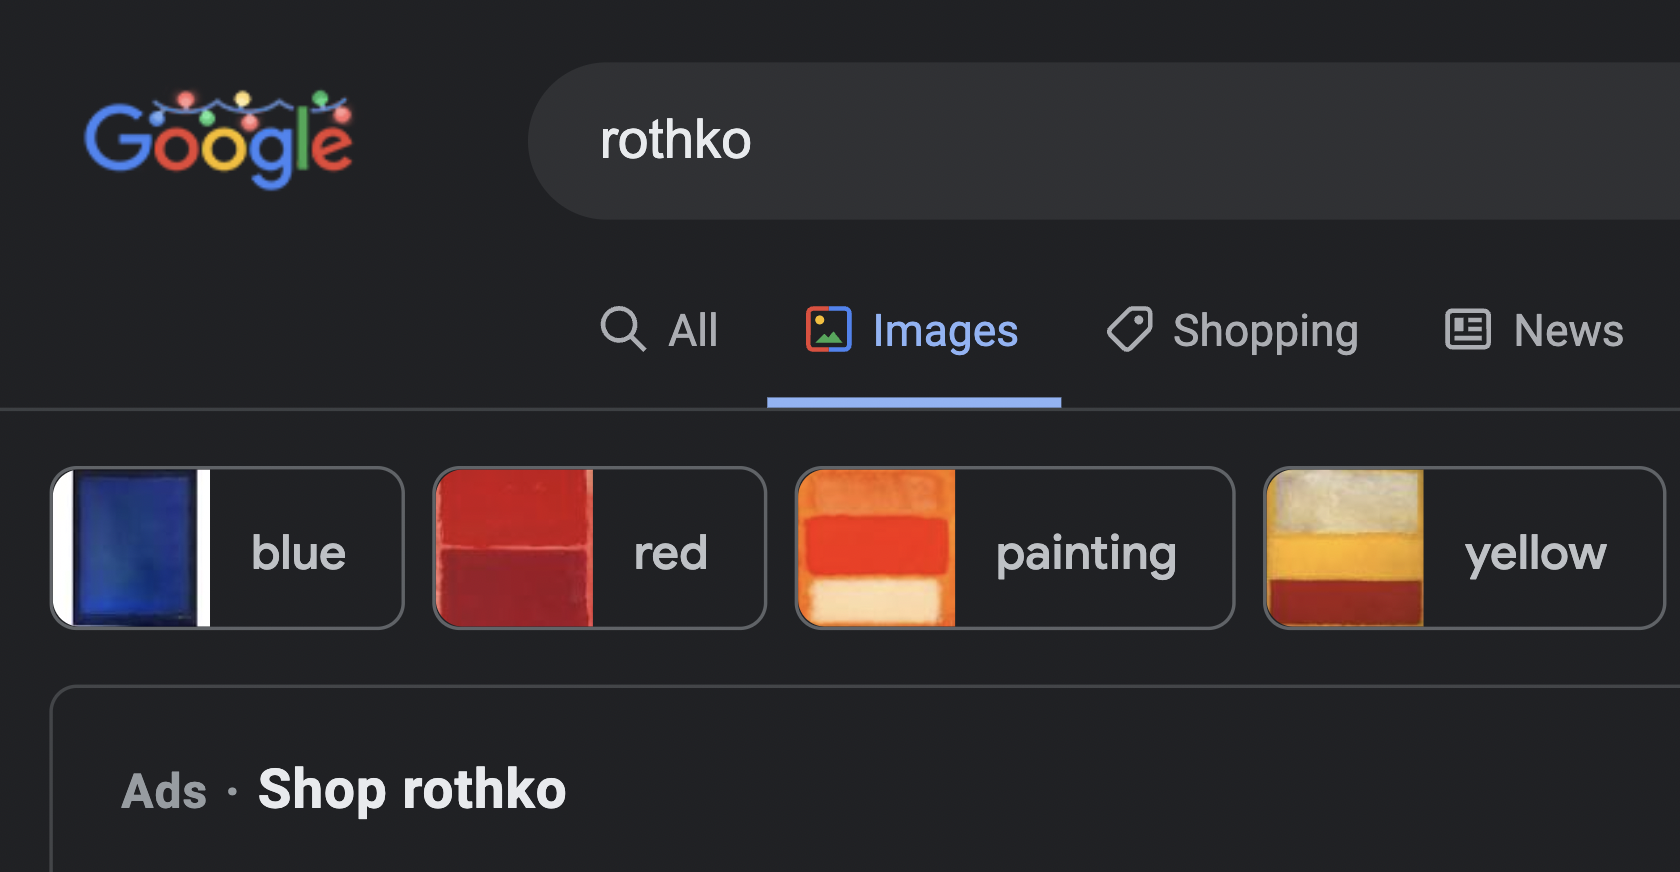 Rothko in the Google search bar.